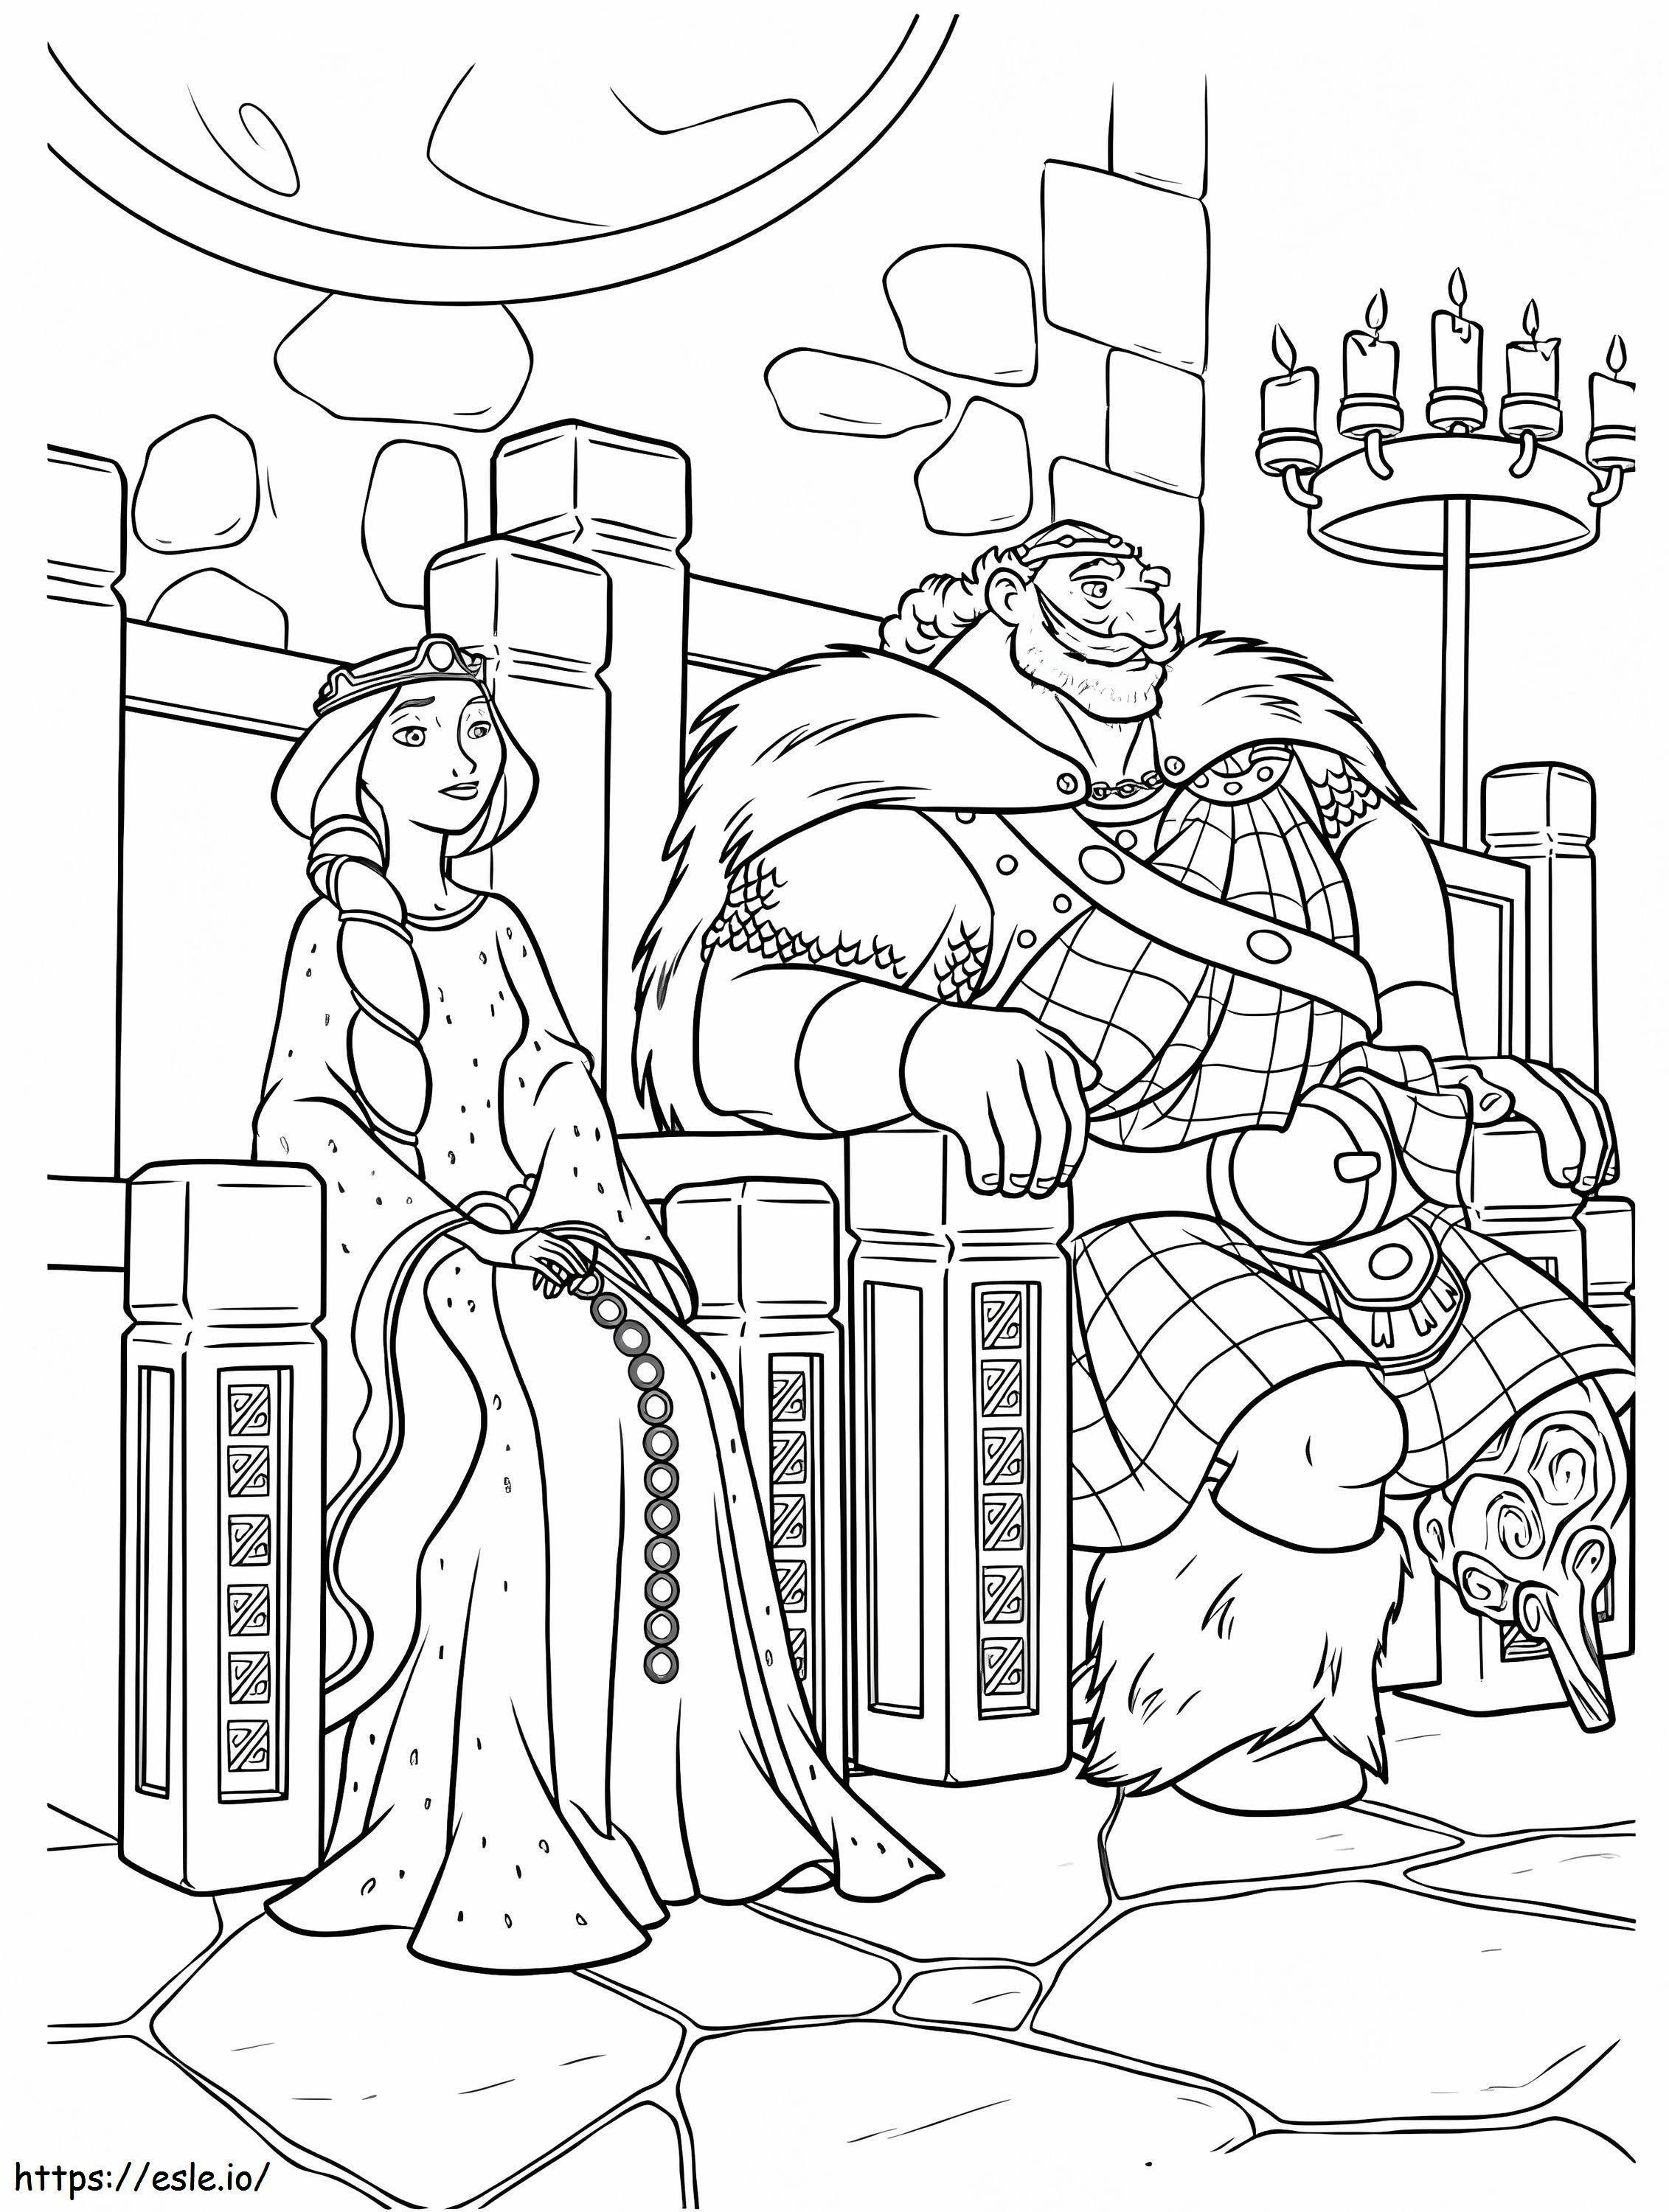 Kuningas Fergus ja kuningatar Elinor istuvat valtaistuimella värityskuva